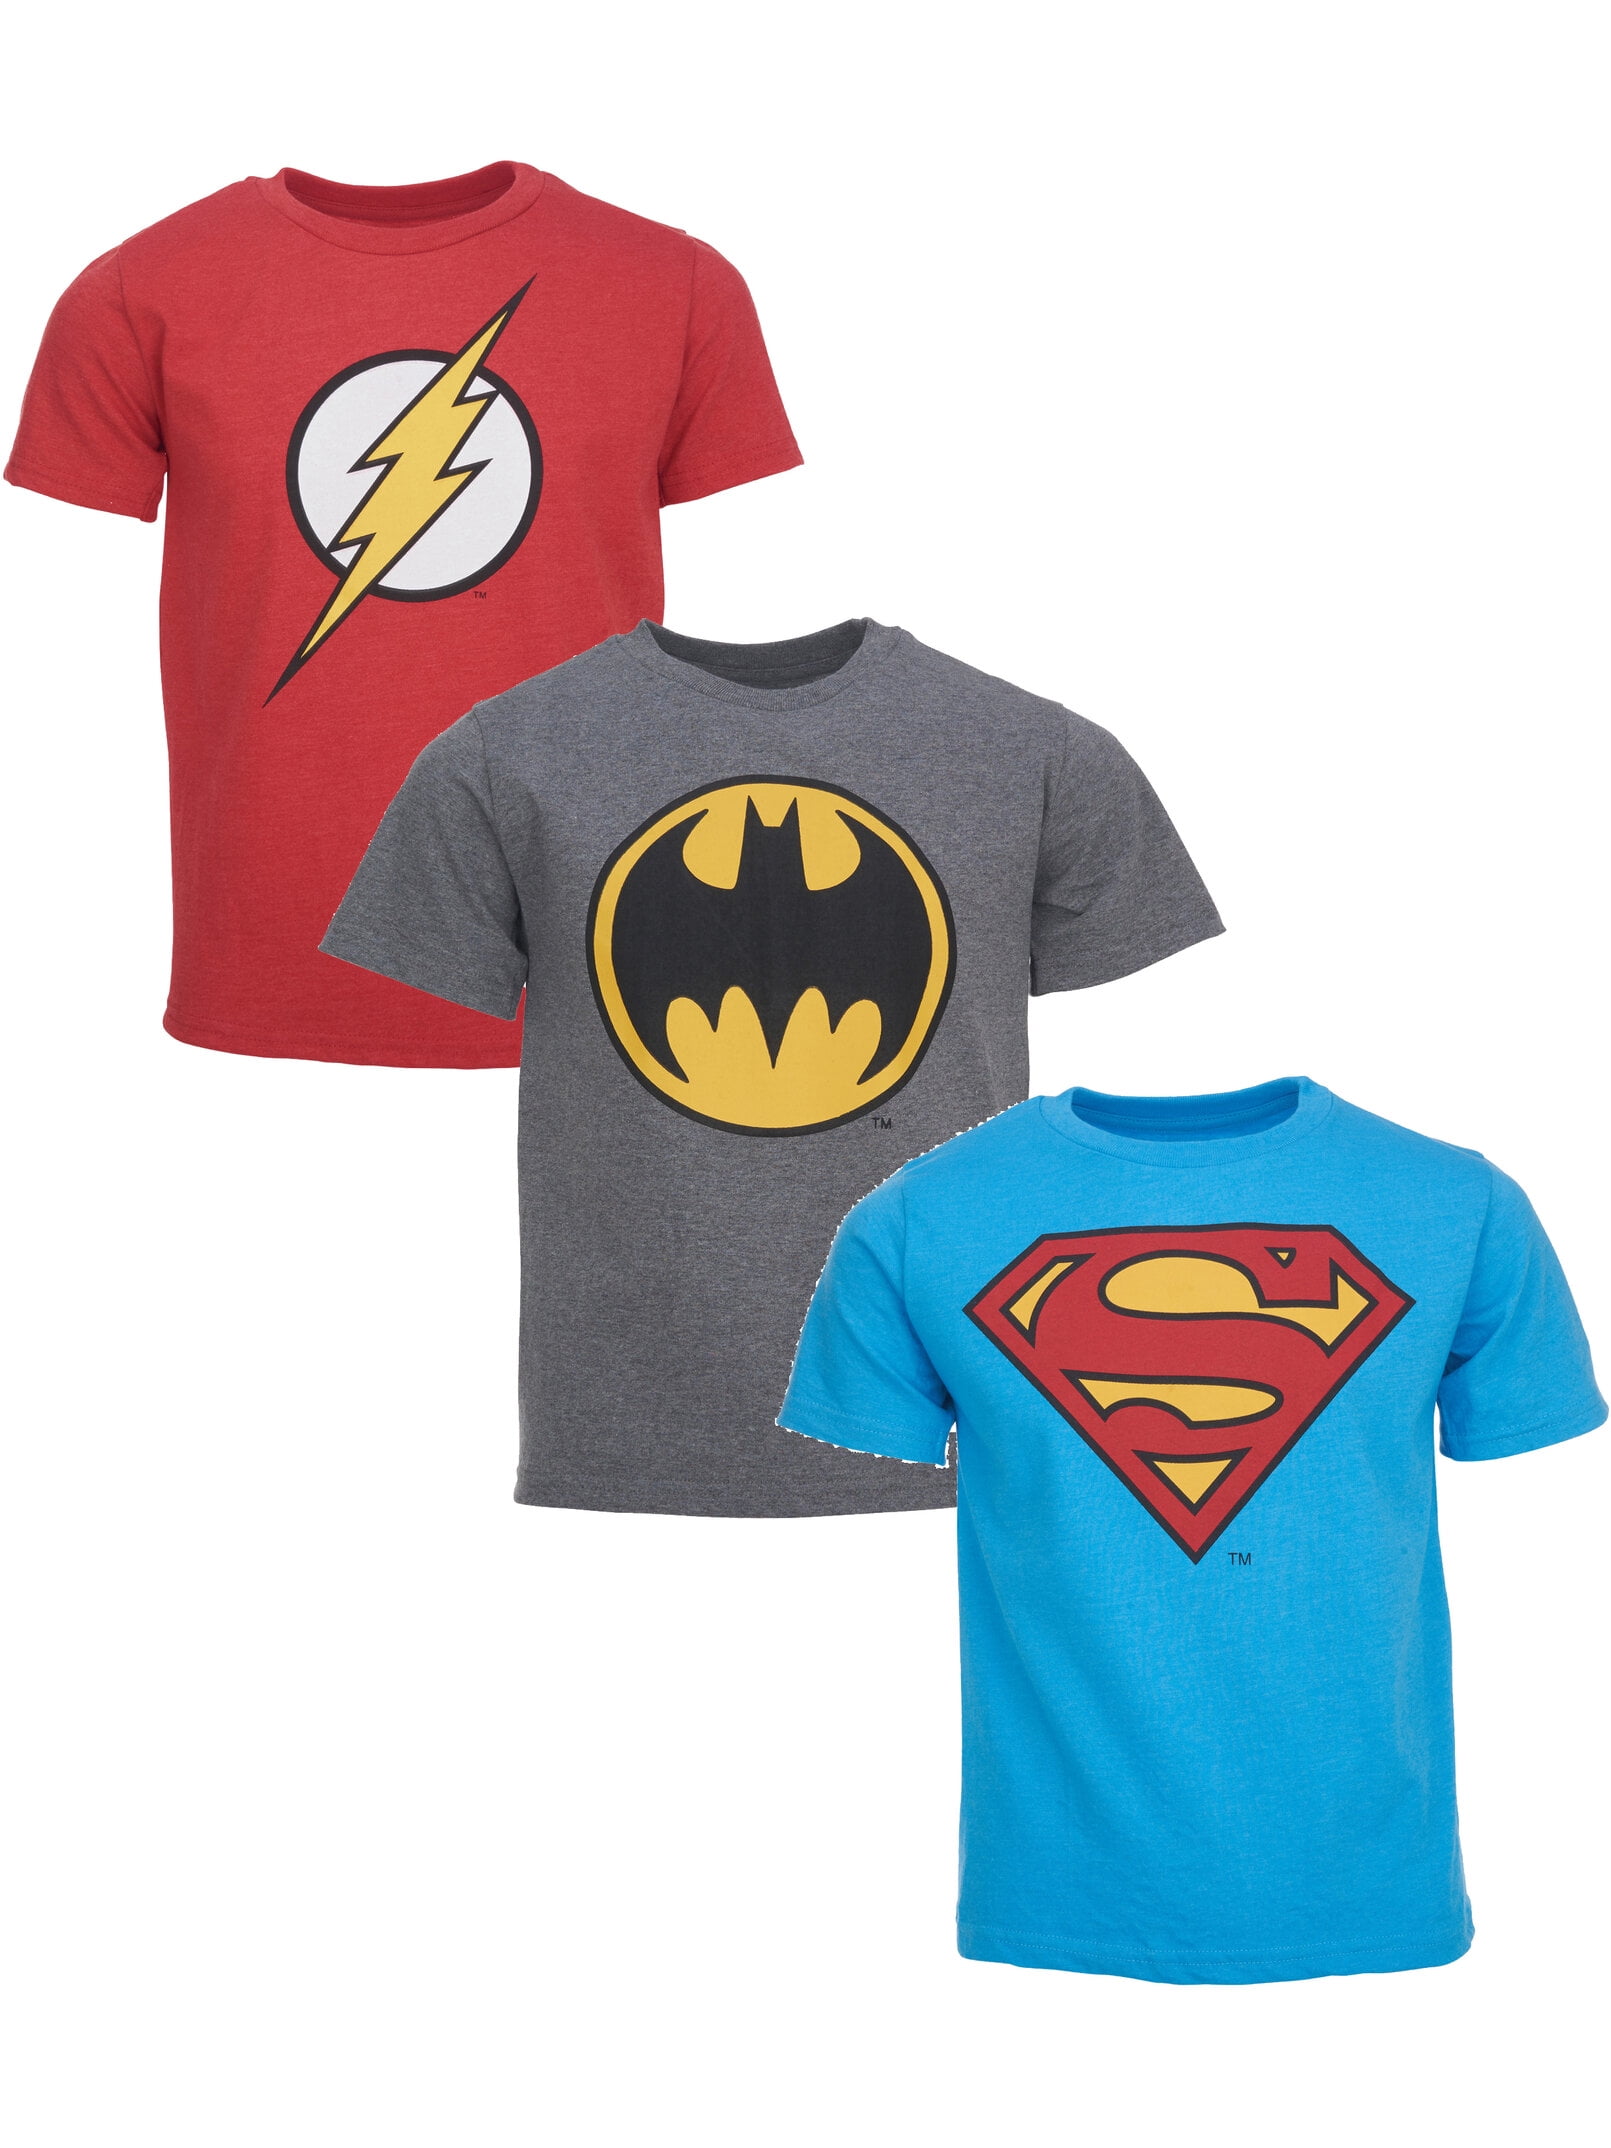 DC Comics Justice League Batman Superman The Flash Big Boys 3 Pack T-Shirts Toddler to Big Kid -